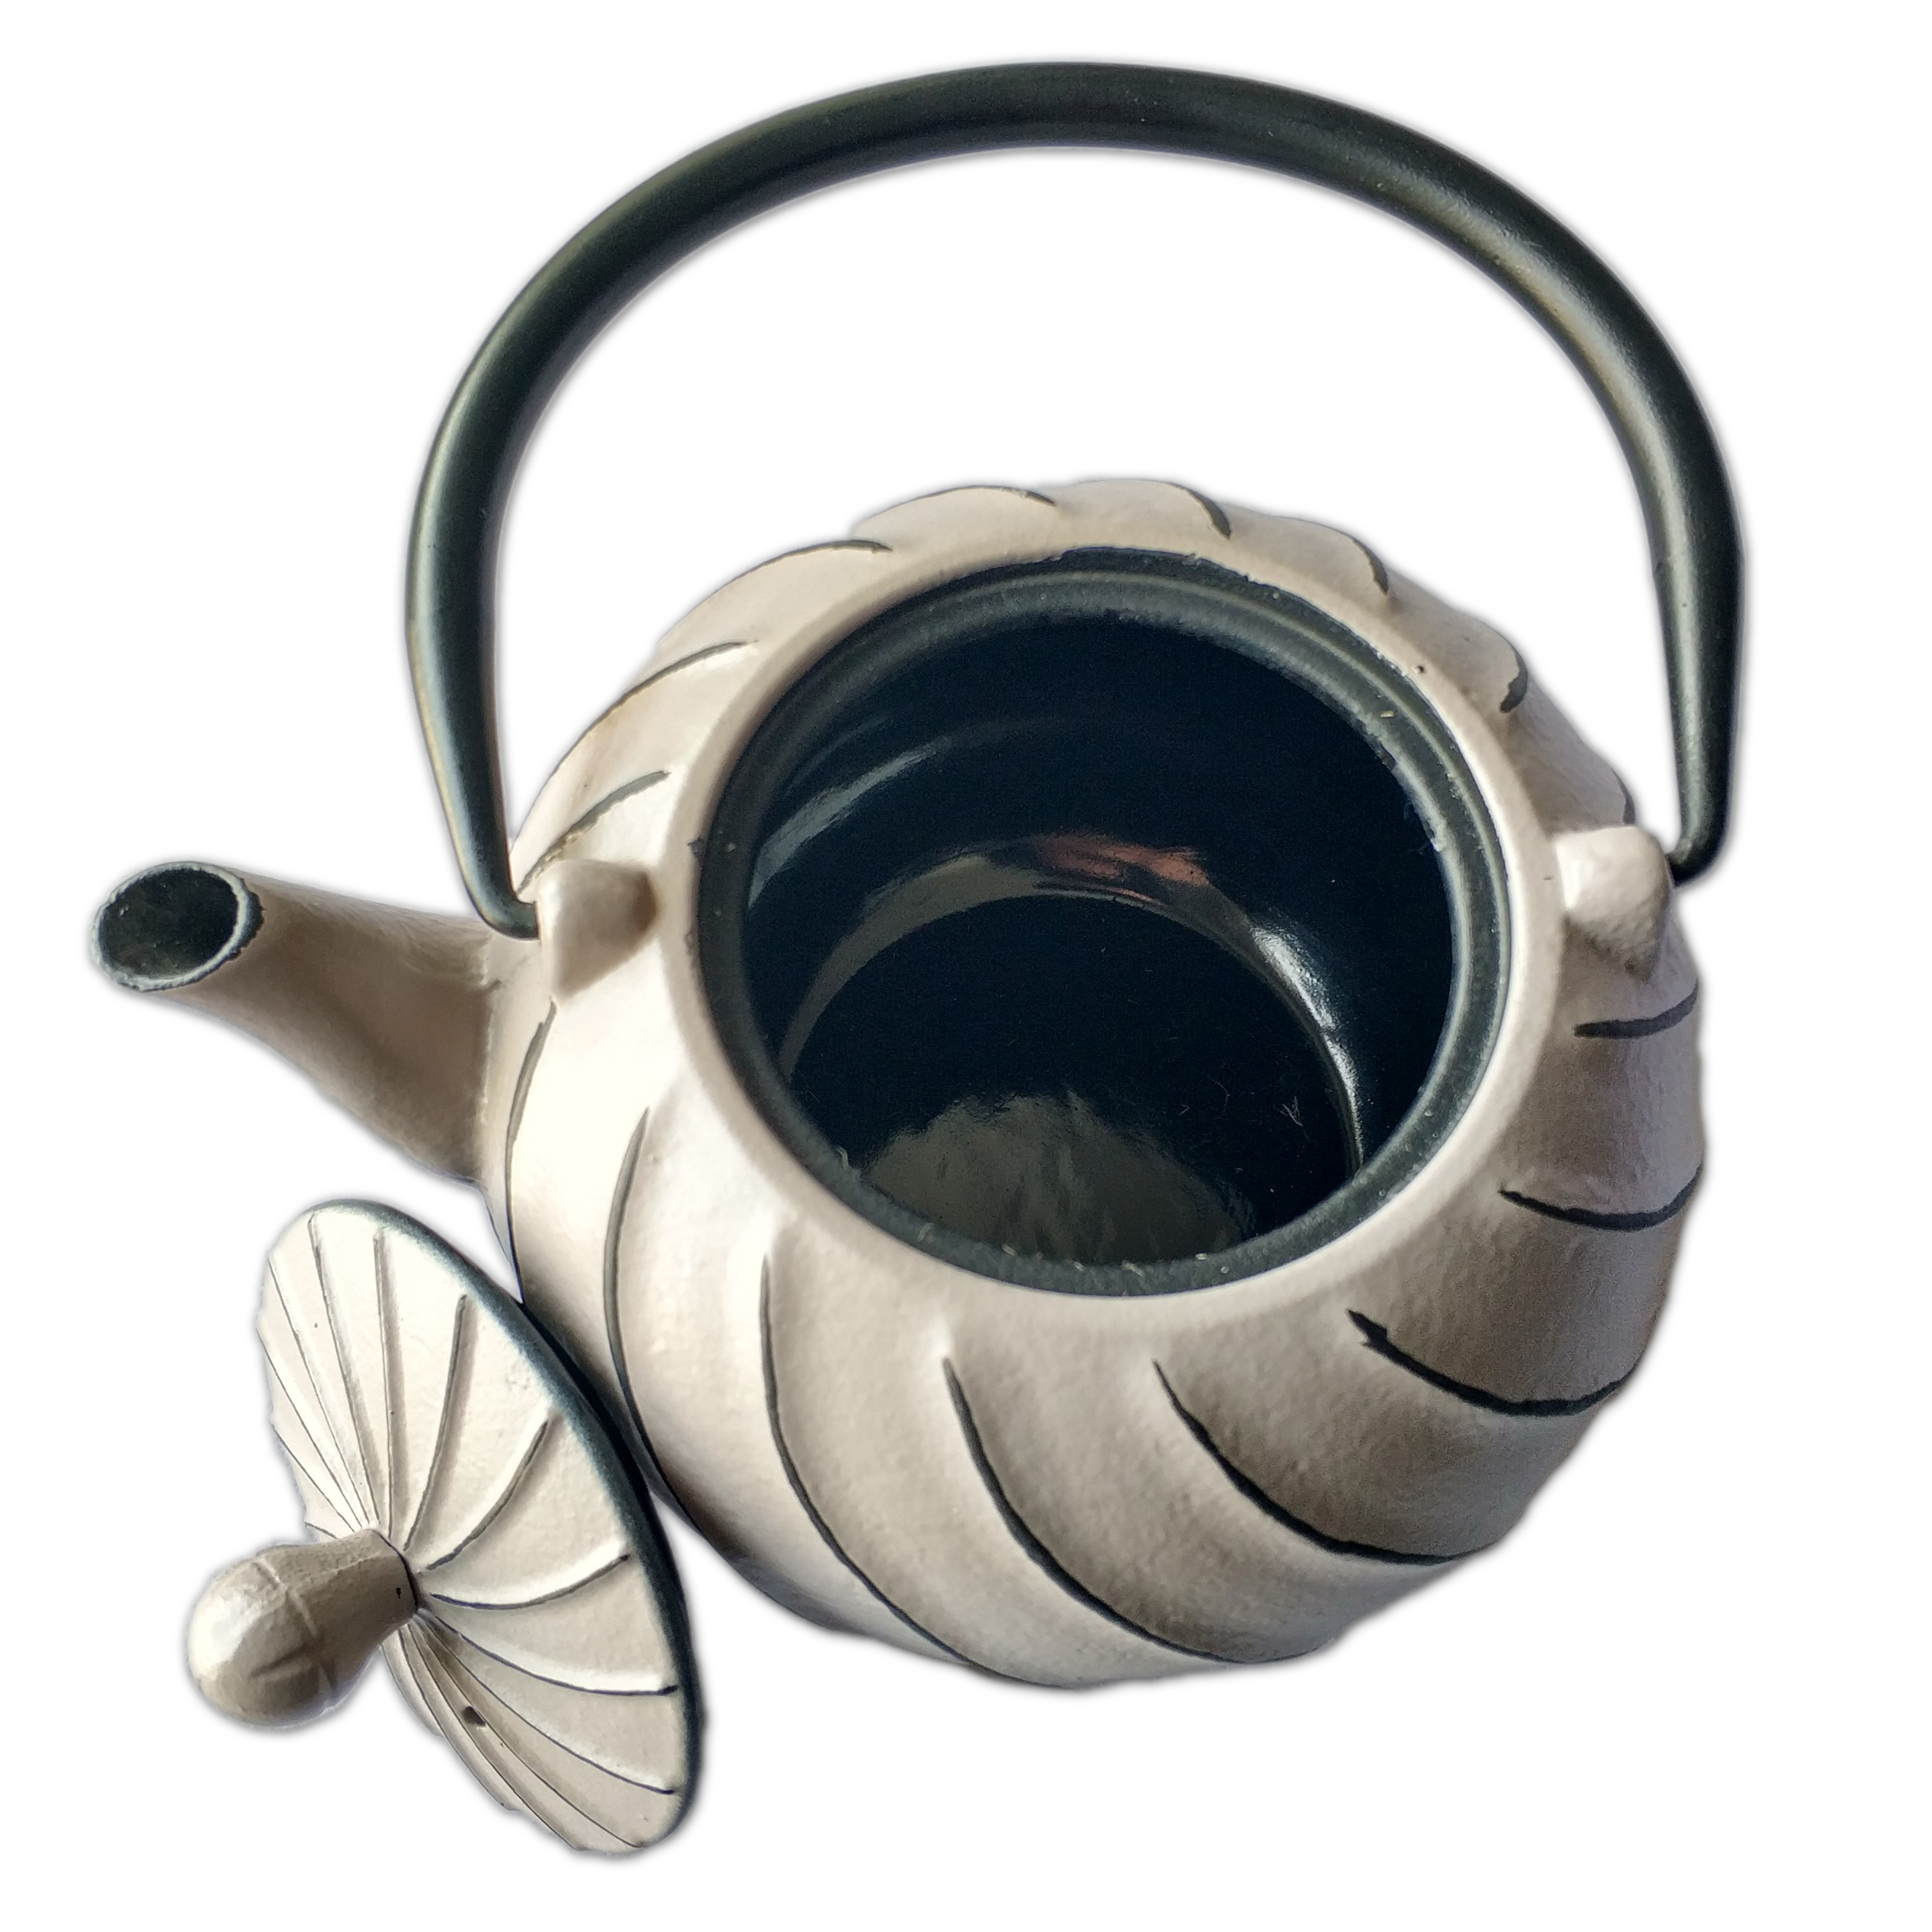 New Design Cast Modern design Creamic Teapot for Sale